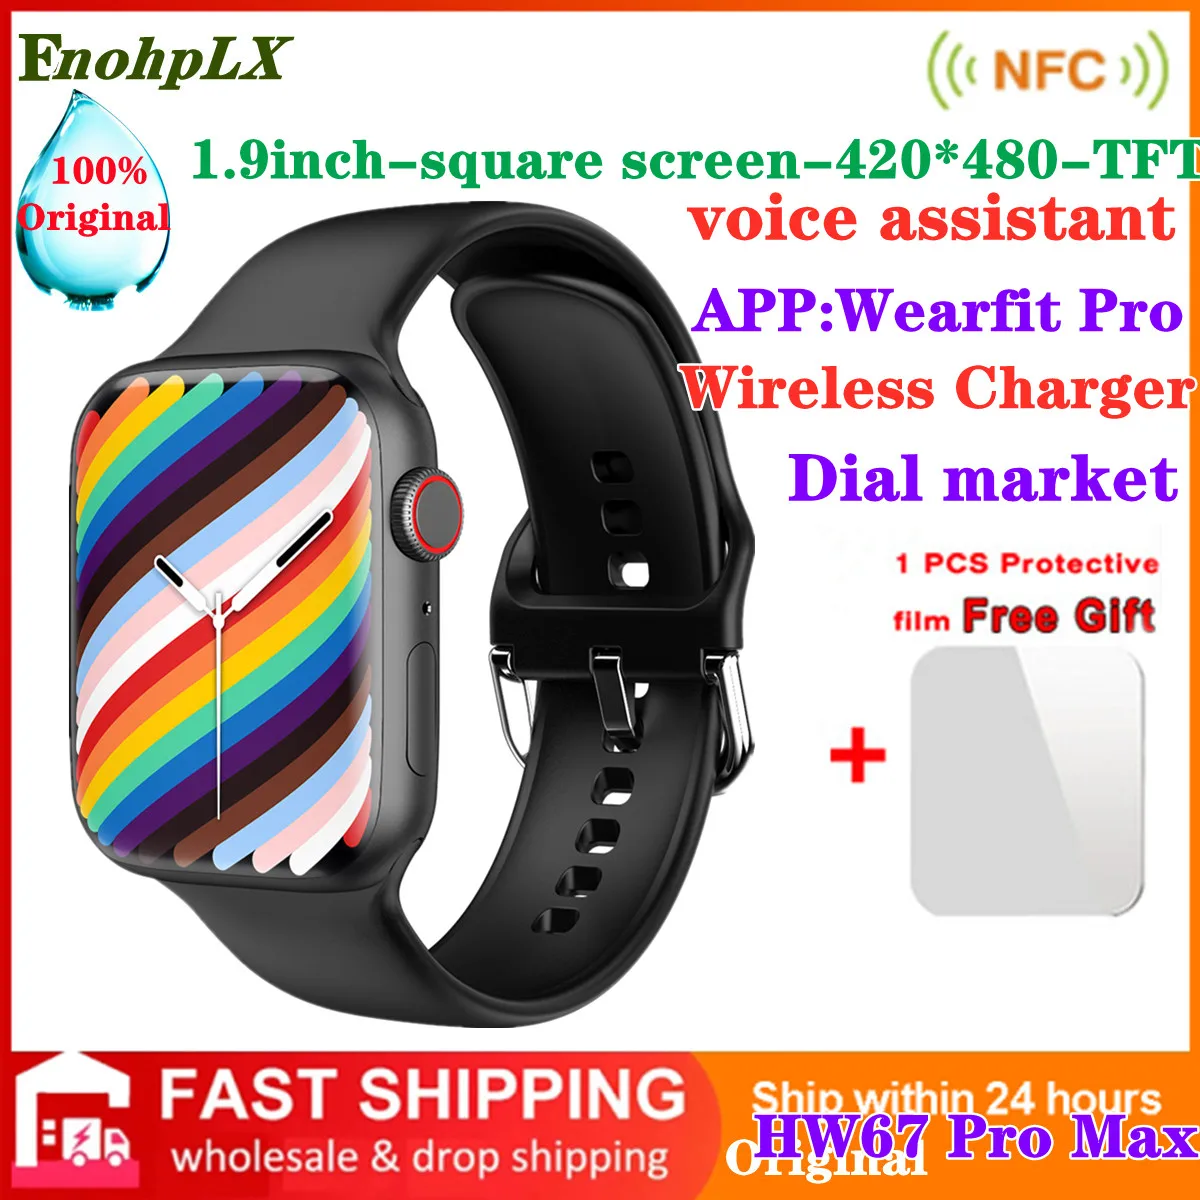 

Original HW67 Pro max Smart Watch Men 1.9 NFC Voice Assistant Payment Bluetooth-Call Smartwatch Women PK iwo W27 HW22 W37 HW57